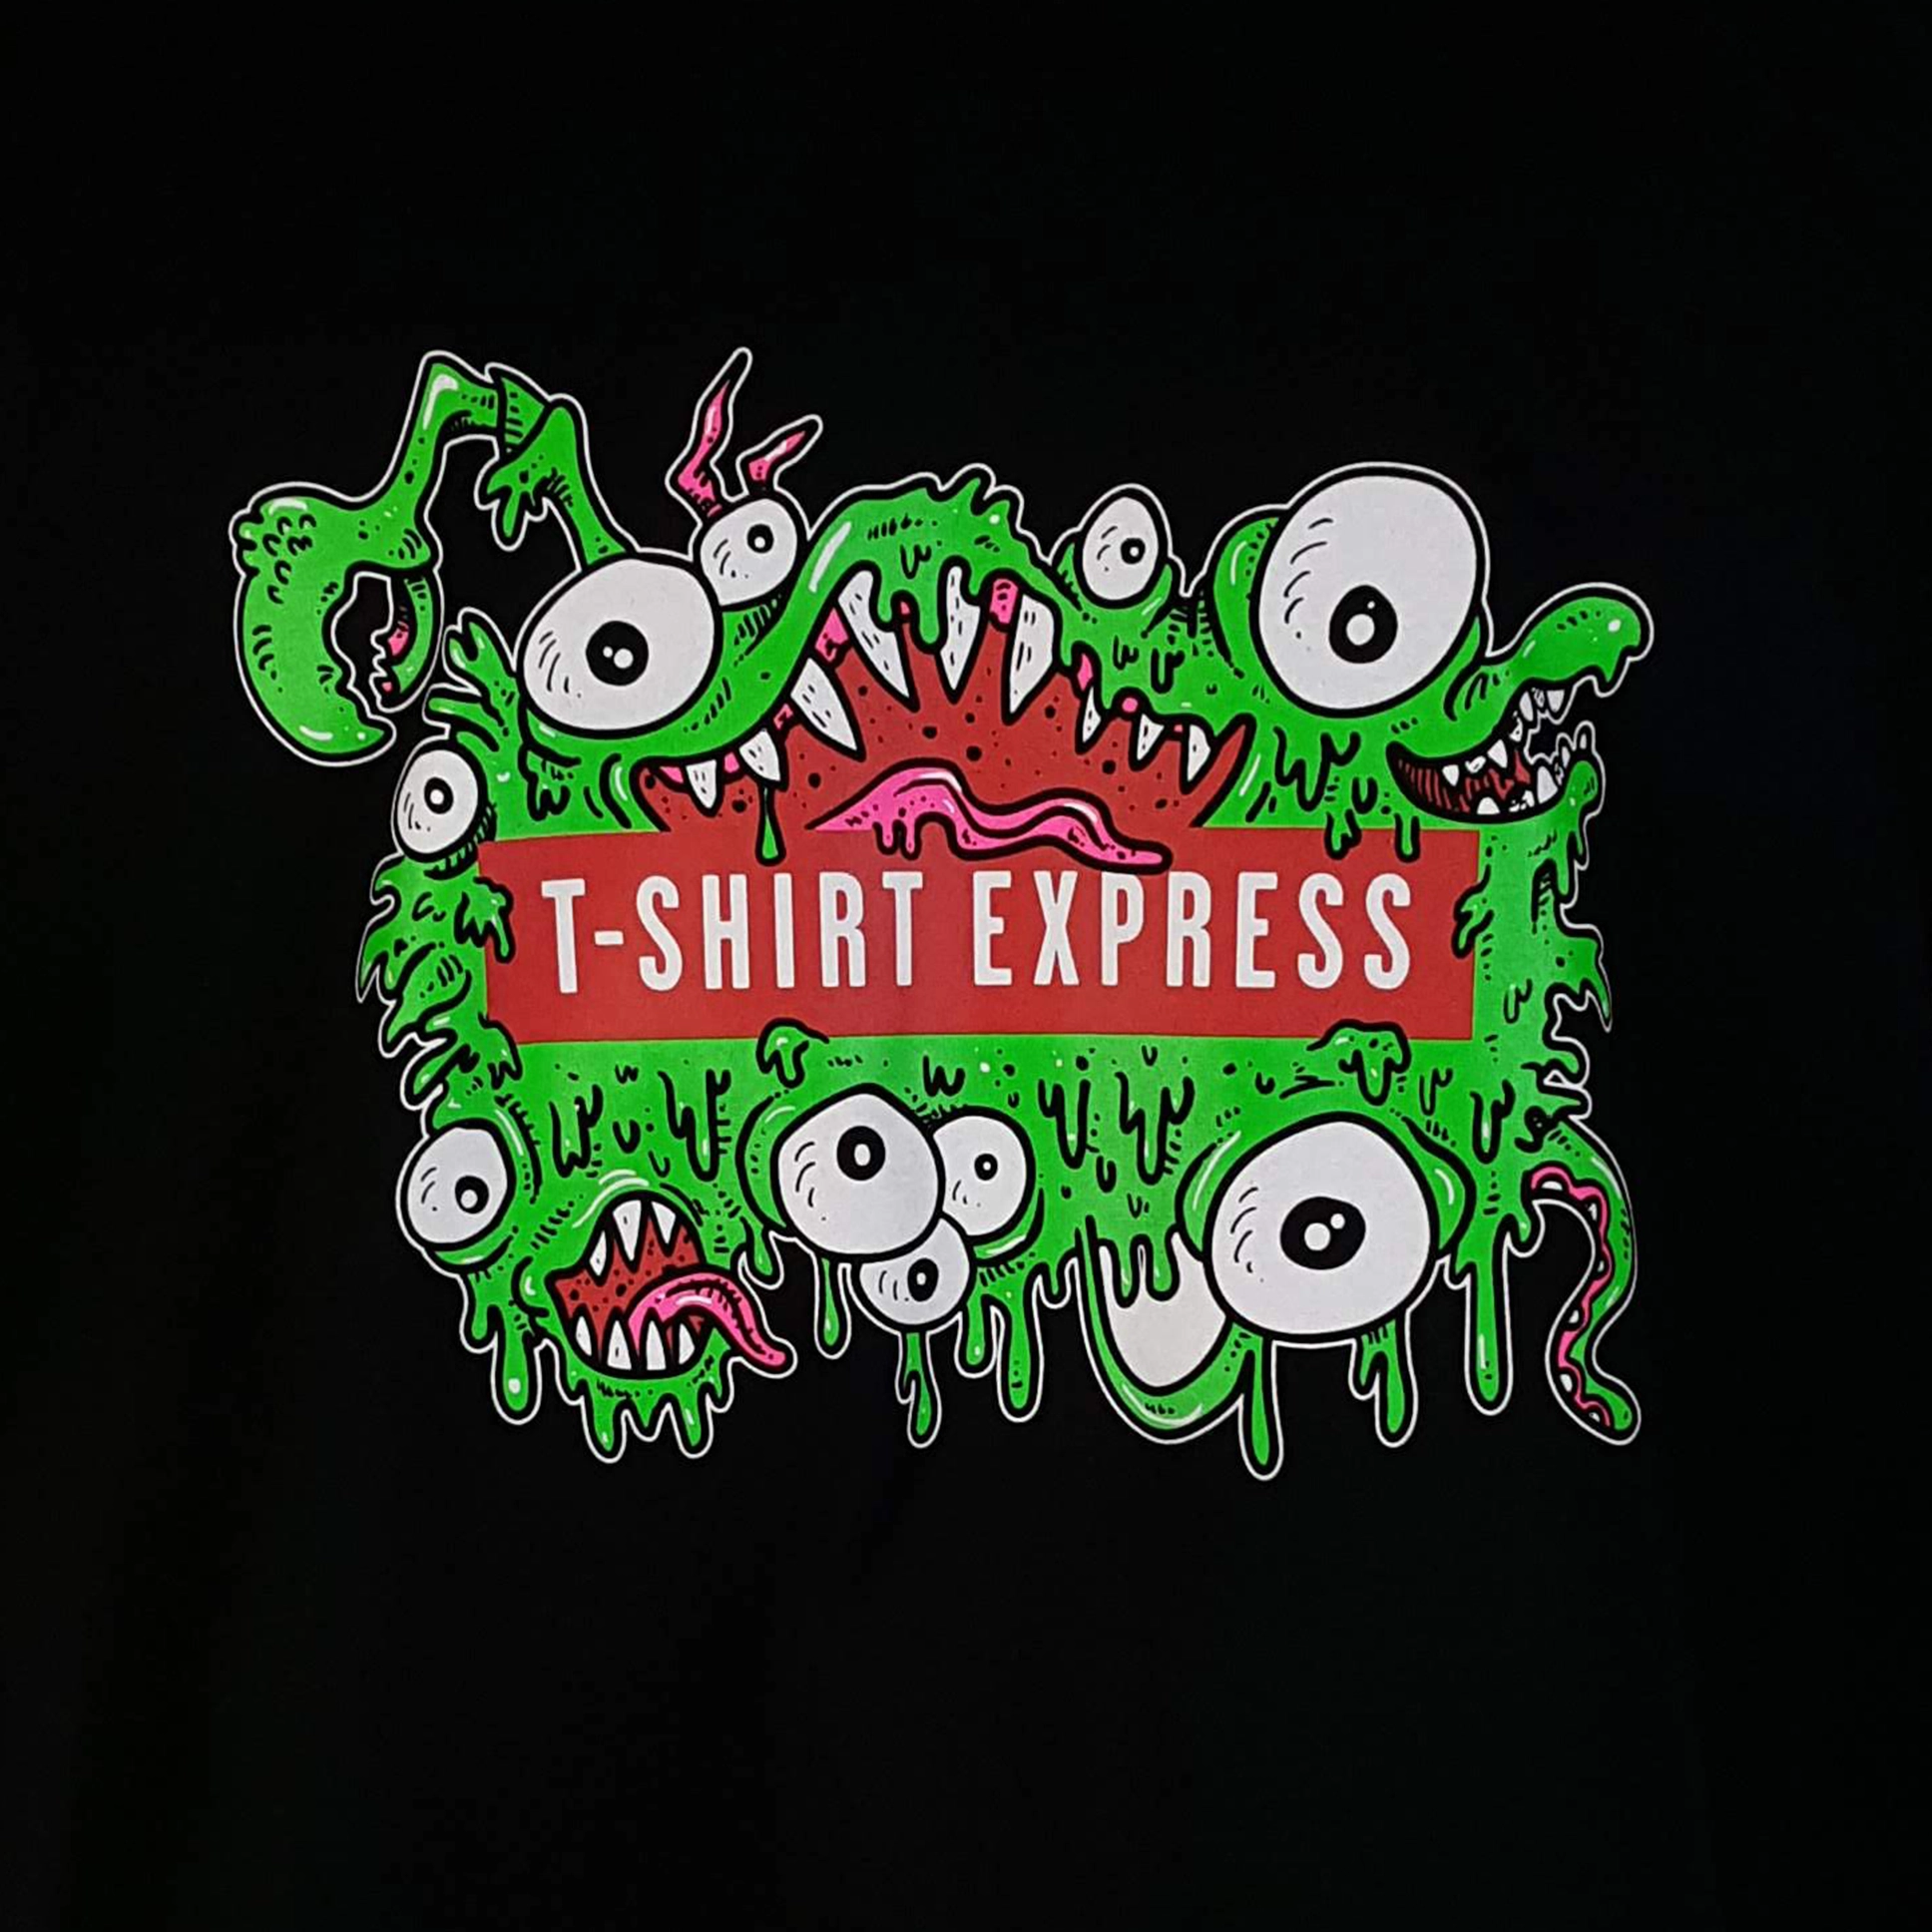 t-shirt express in Ash ohio